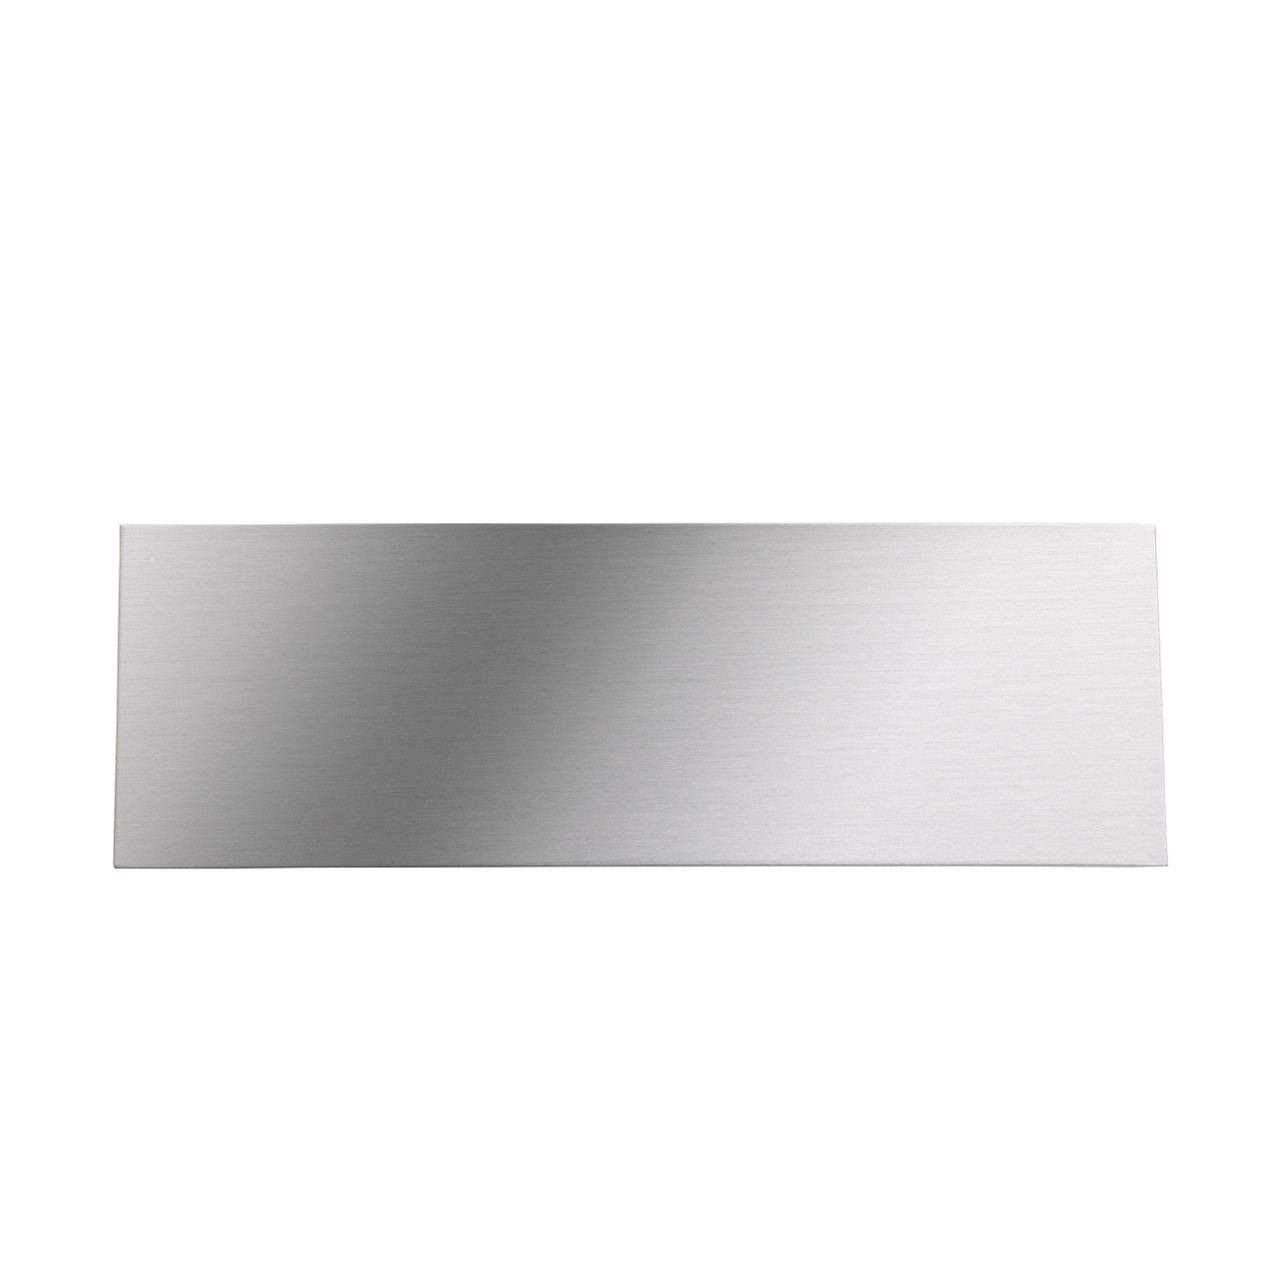 Aluminum Laser Engraving Plates (Blank)